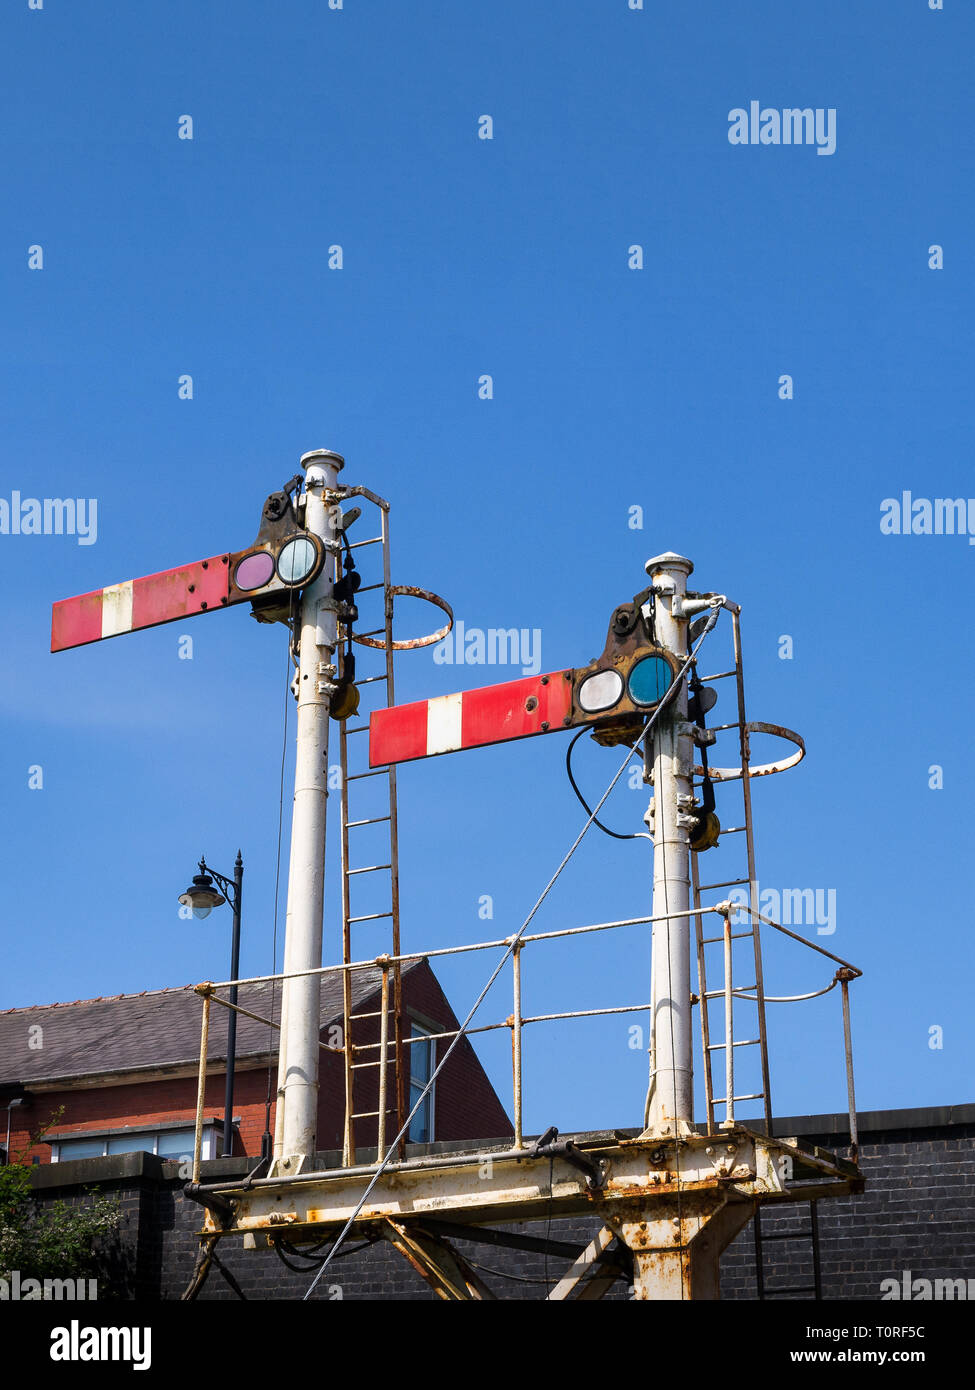 2 Railway semaphore signals Stock Photo